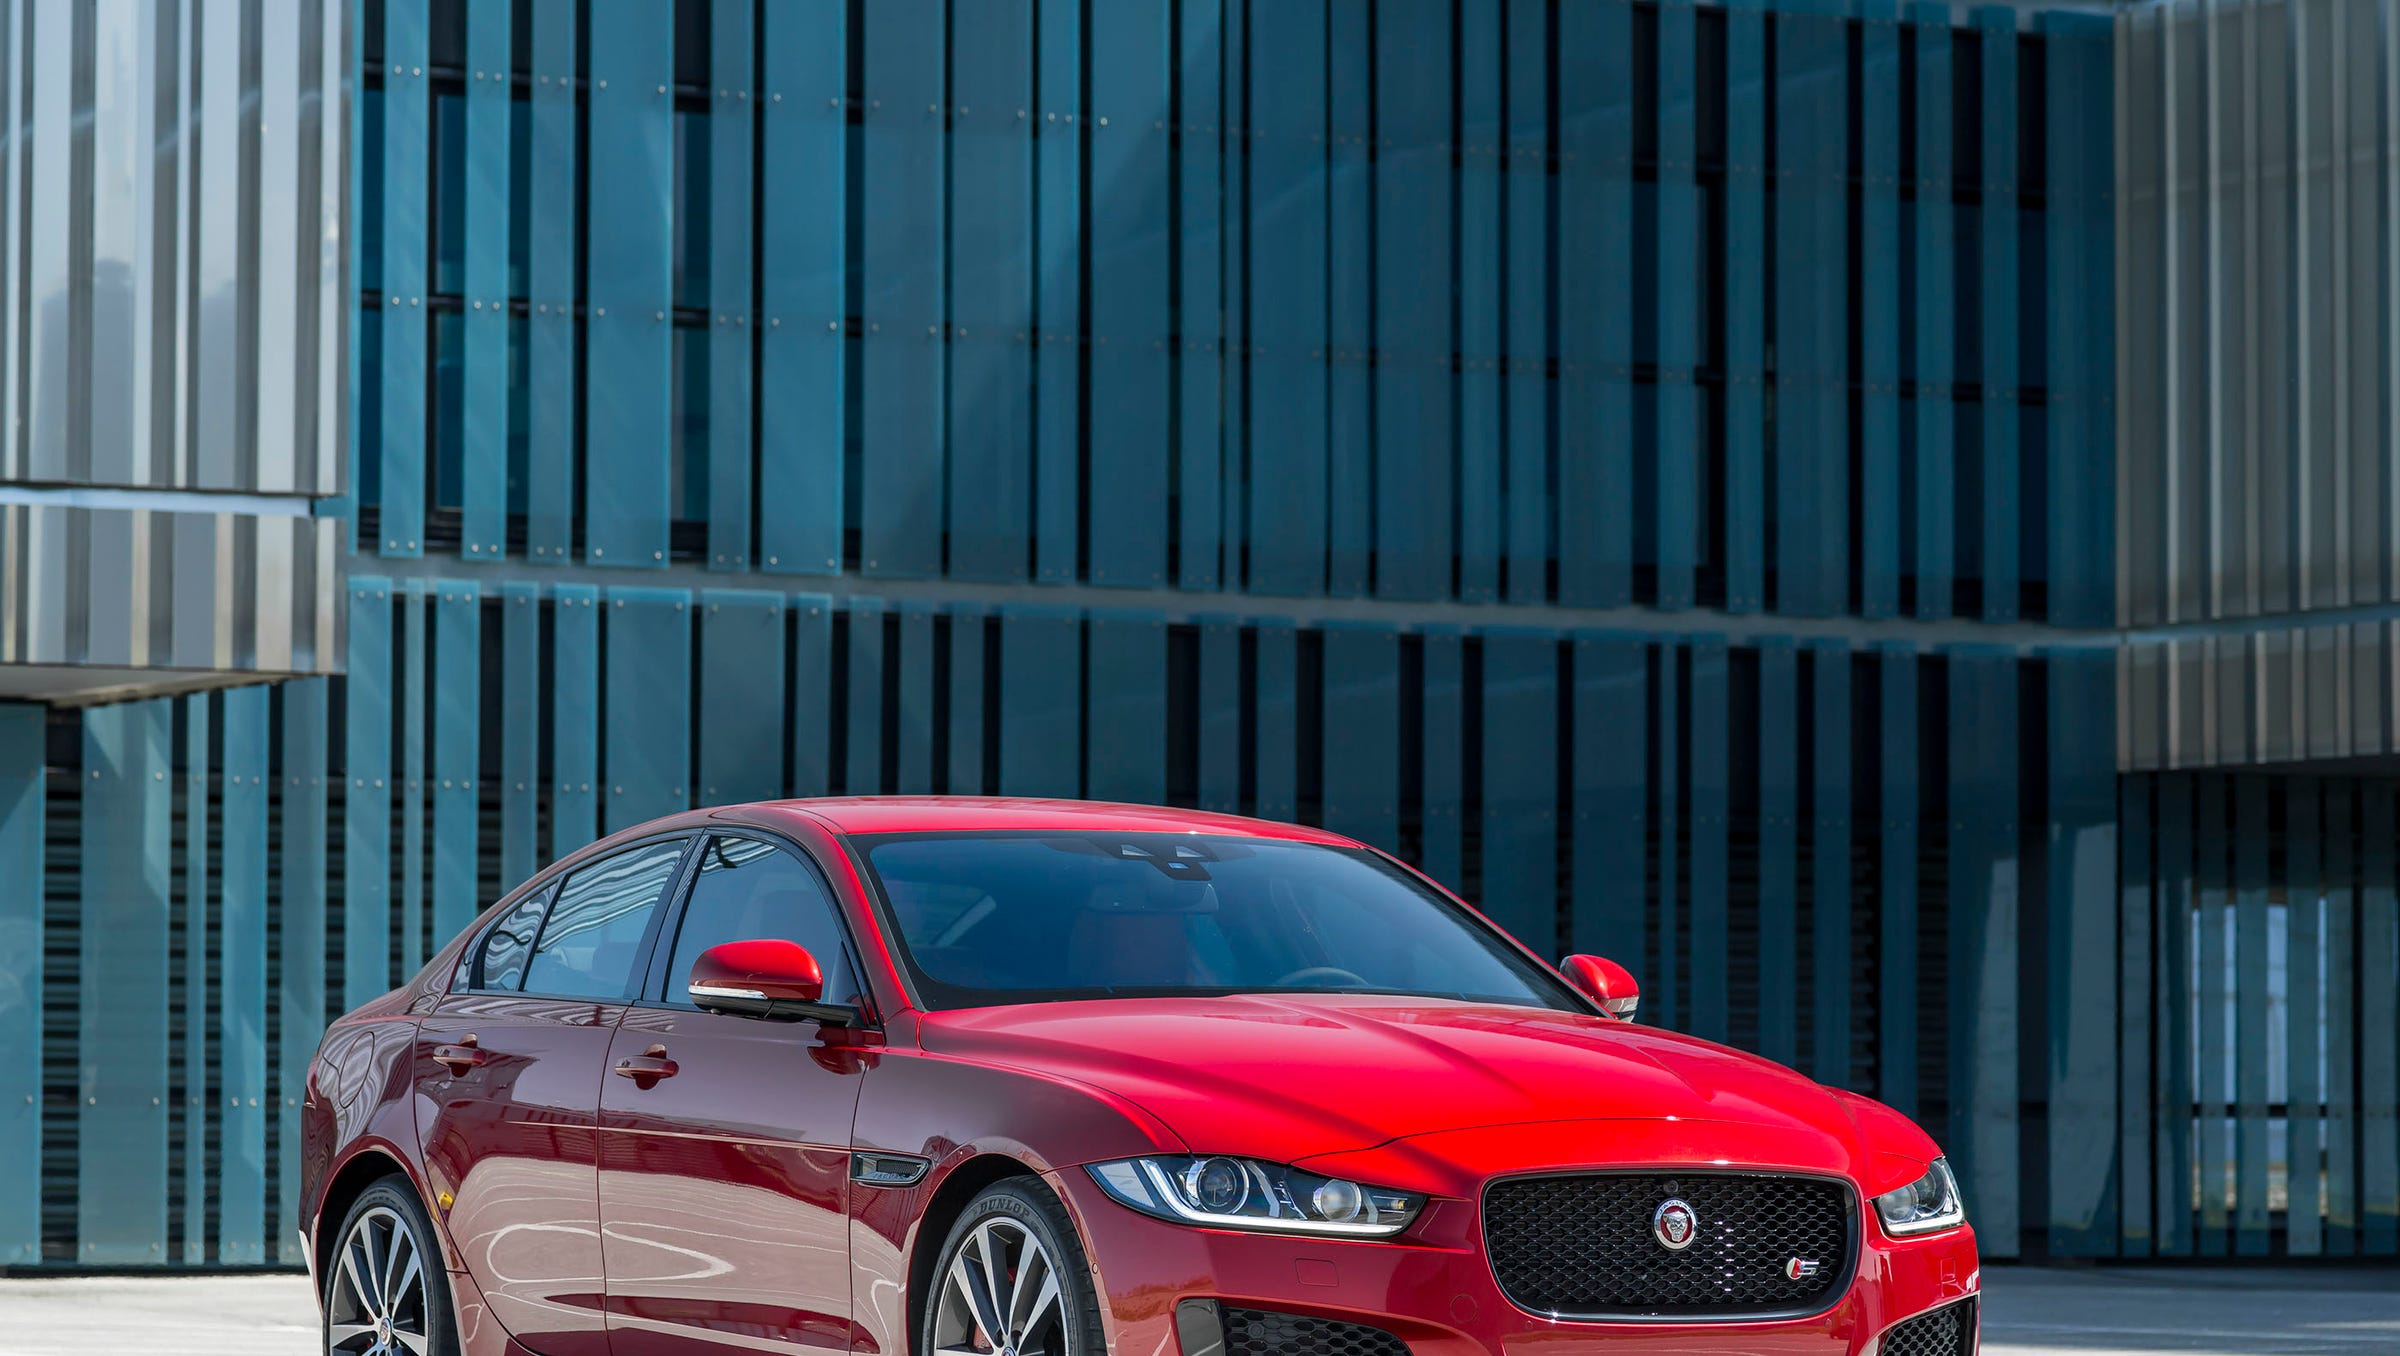 Jaguar has new vehicles, lower prices, free maintenance